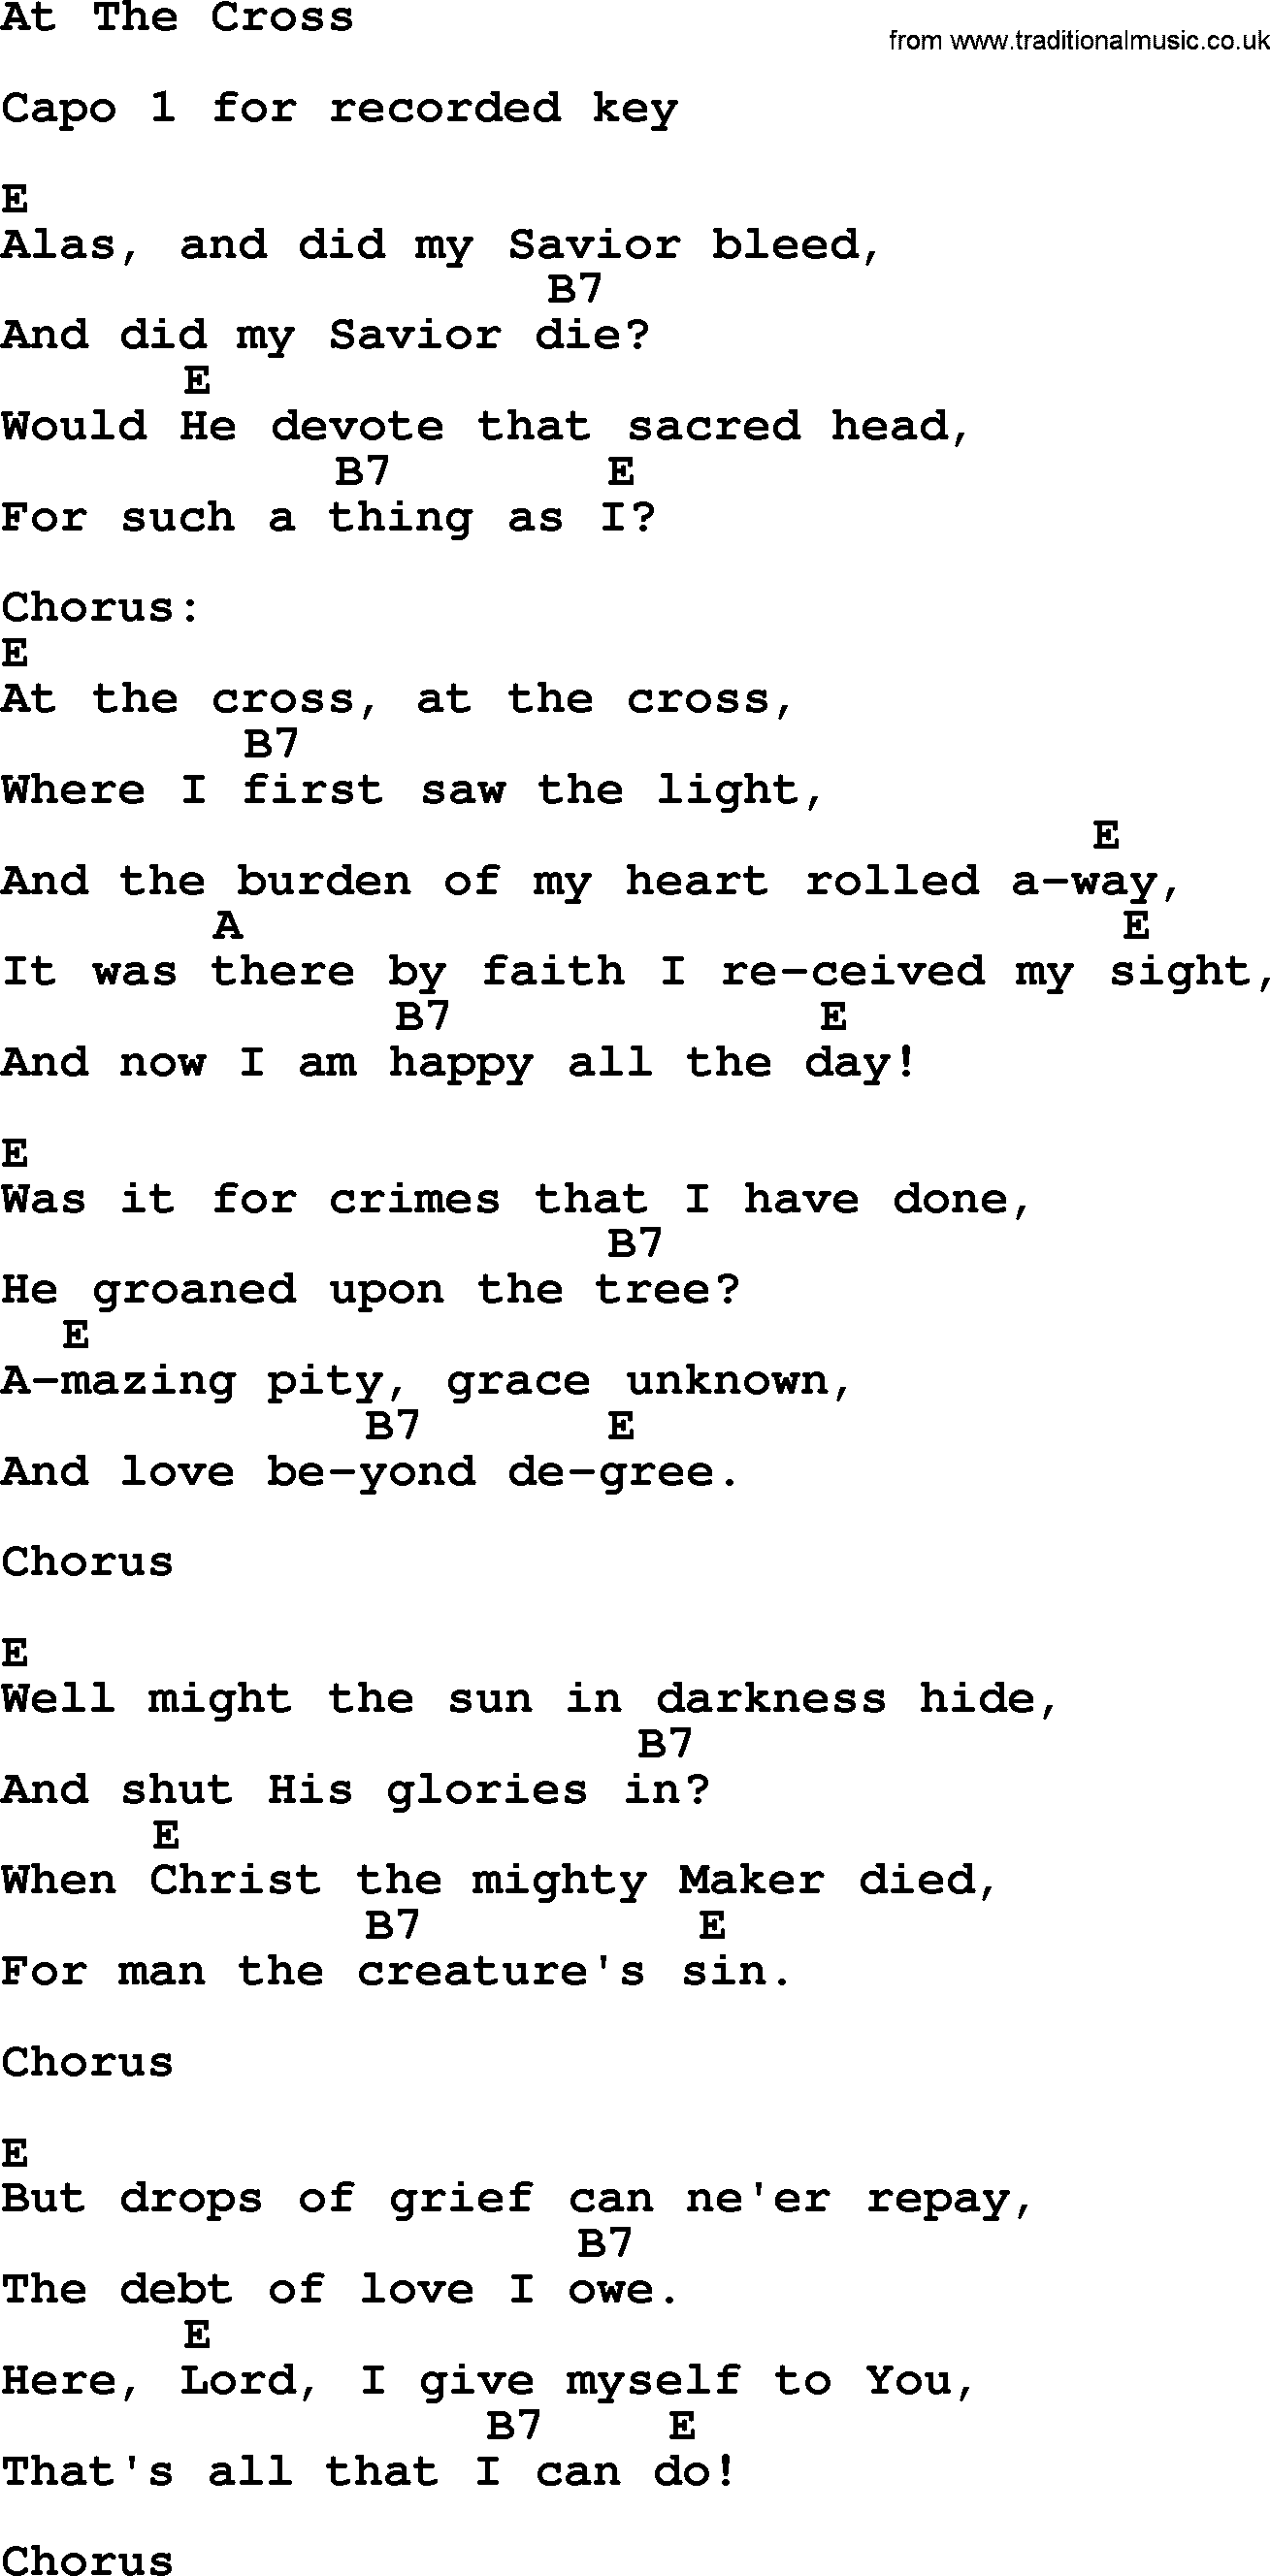 Hank Williams song At The Cross, lyrics and chords